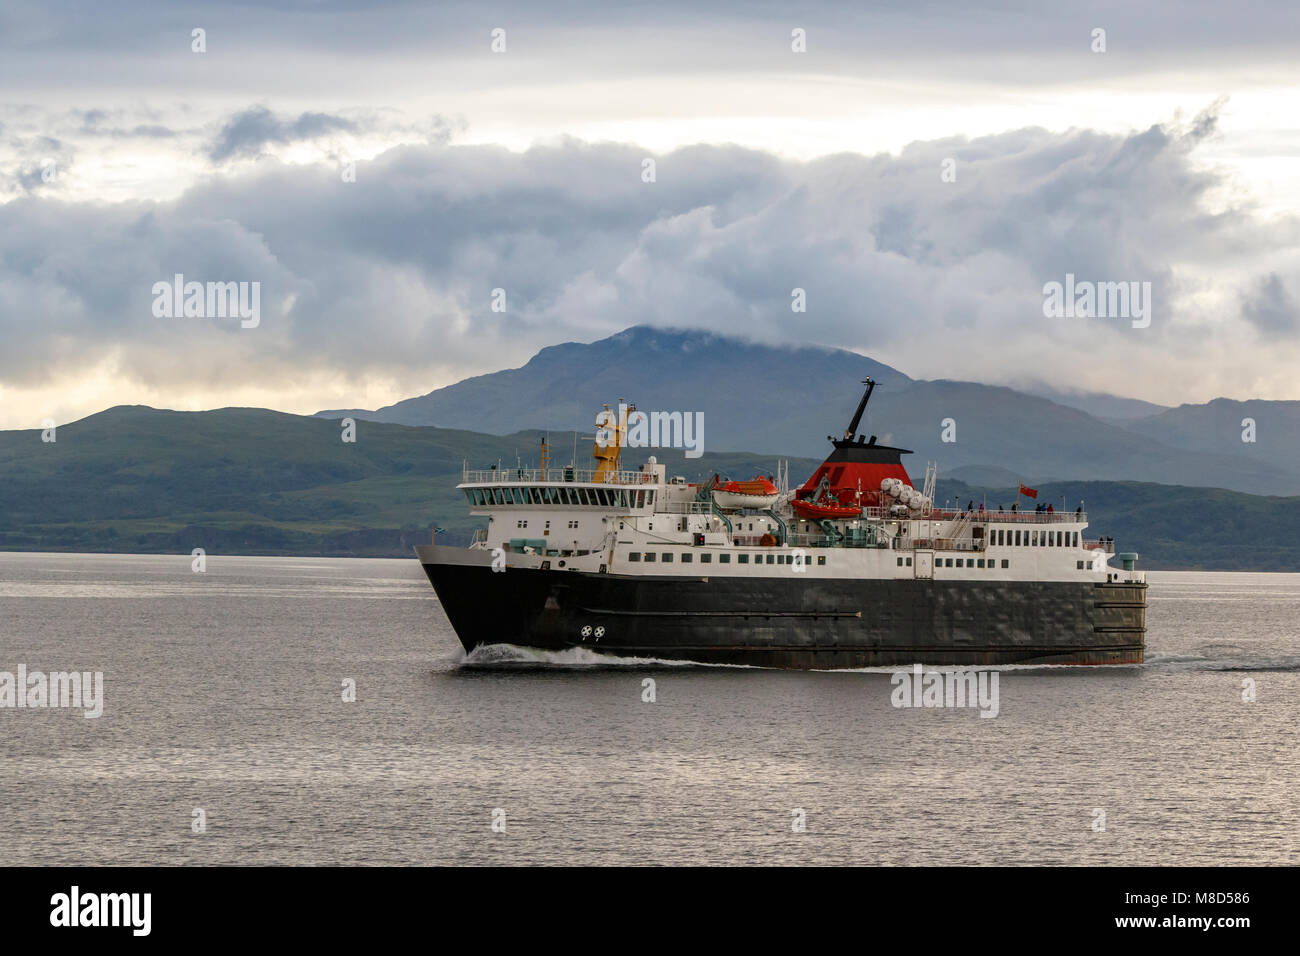 Oban, Scotland / United Kingdom - Jul 09 2017: Ferry from Isle of Mull. Stock Photo